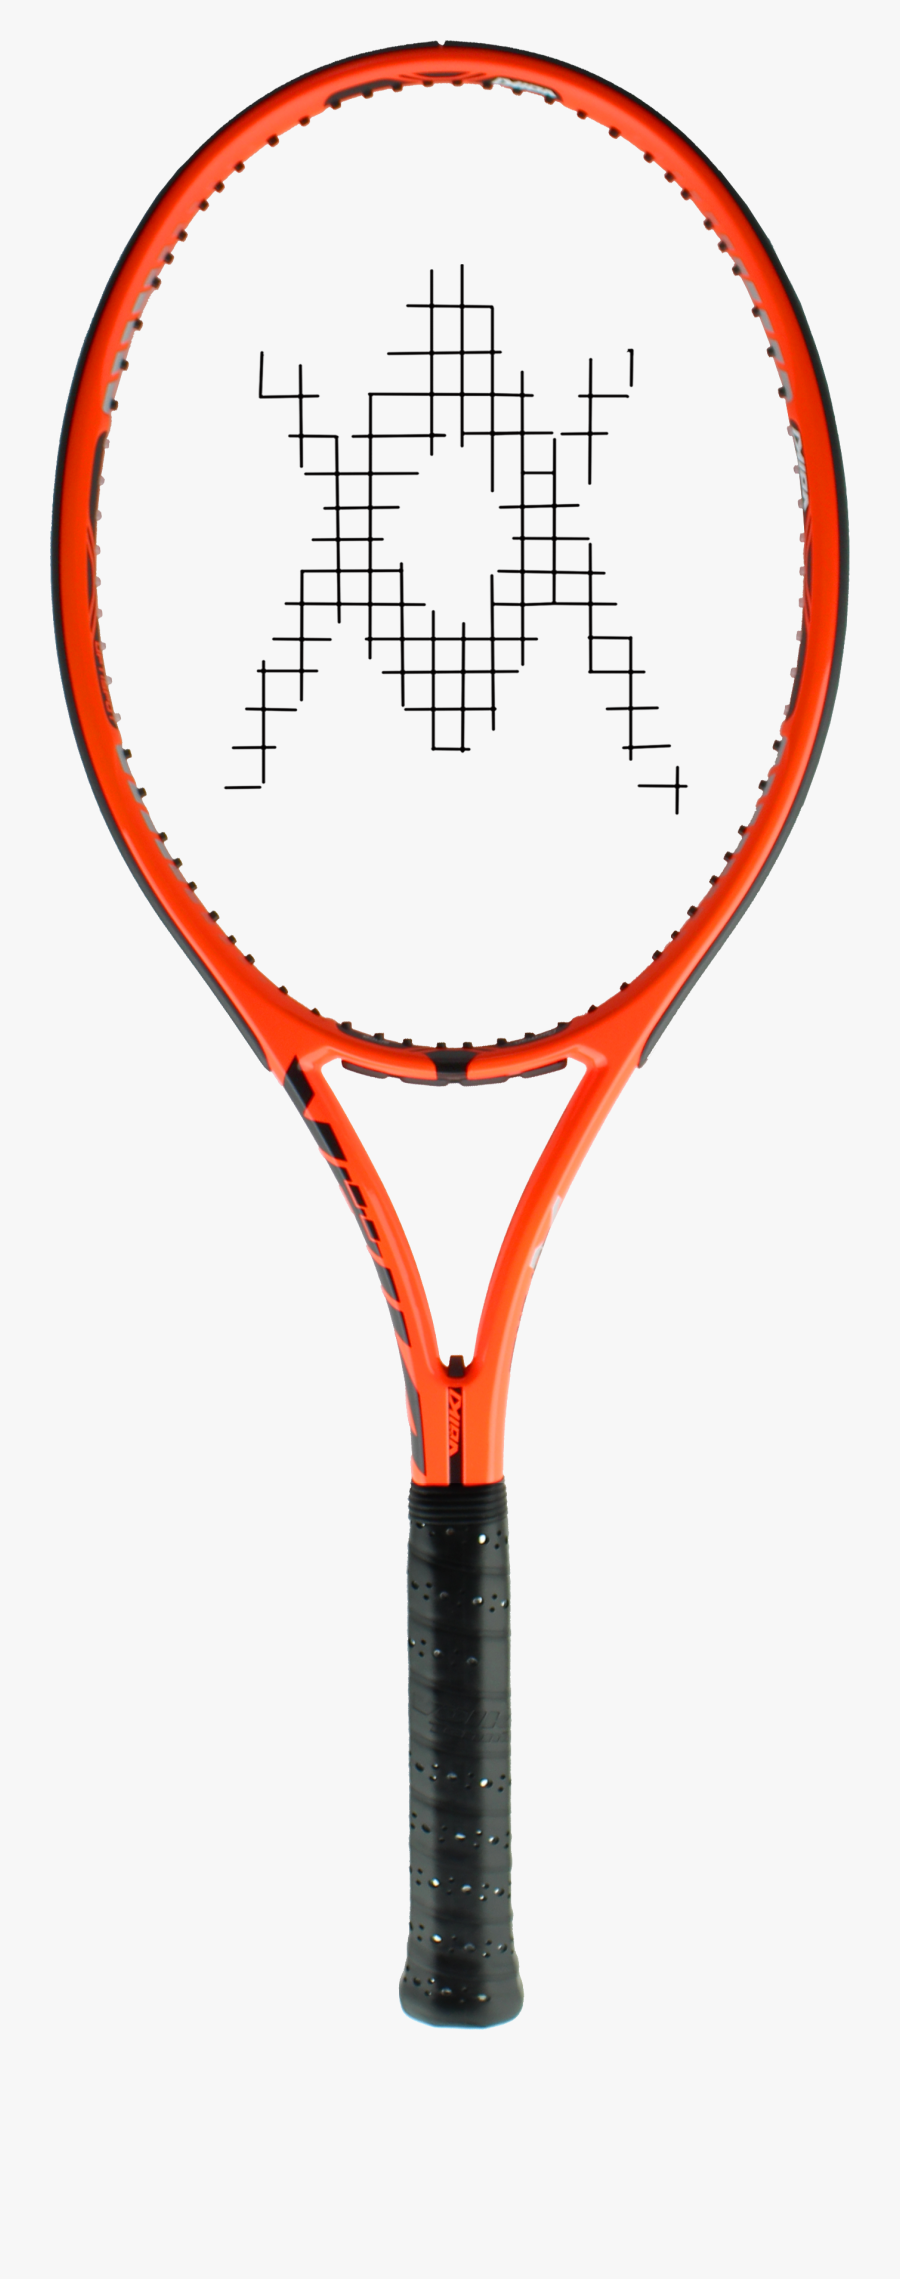 Tennis Png Images Free Download, Tennis Ball Racket - Transparent Background Tennis Racket Png, Transparent Clipart